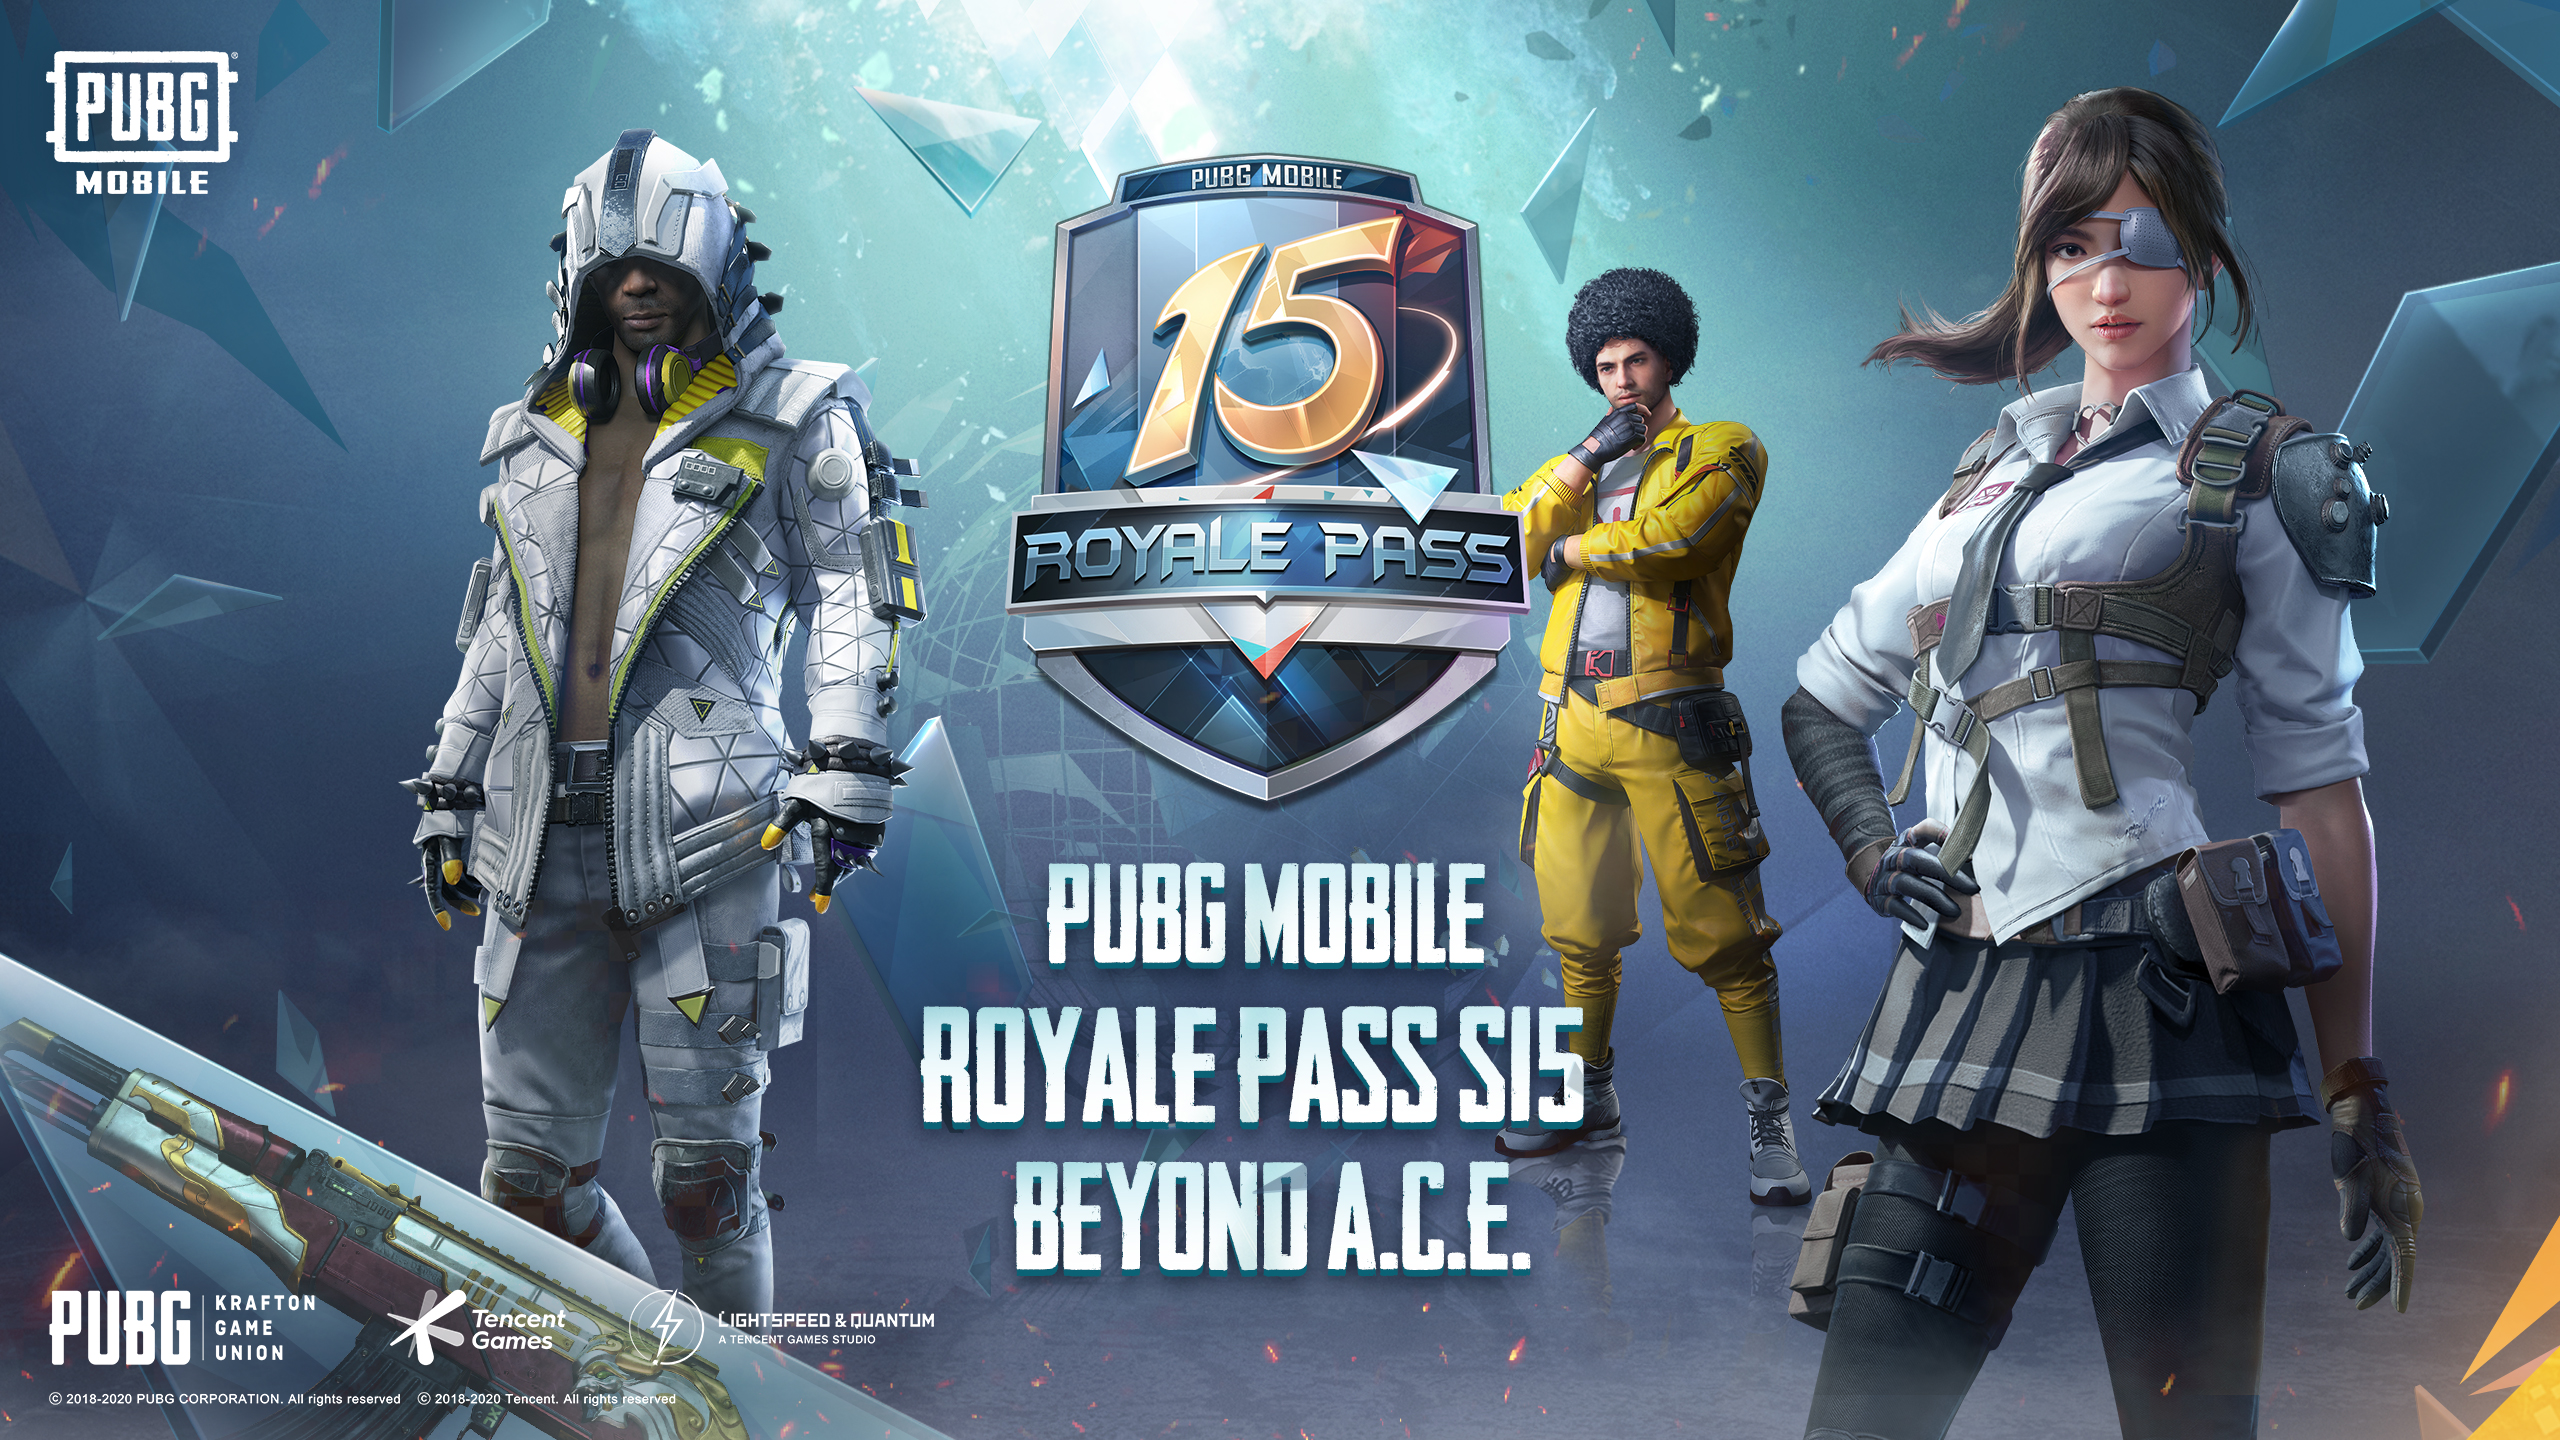 PUBG Mobile season 15, Beyond A.C.E, has begun with the new Royale Pass